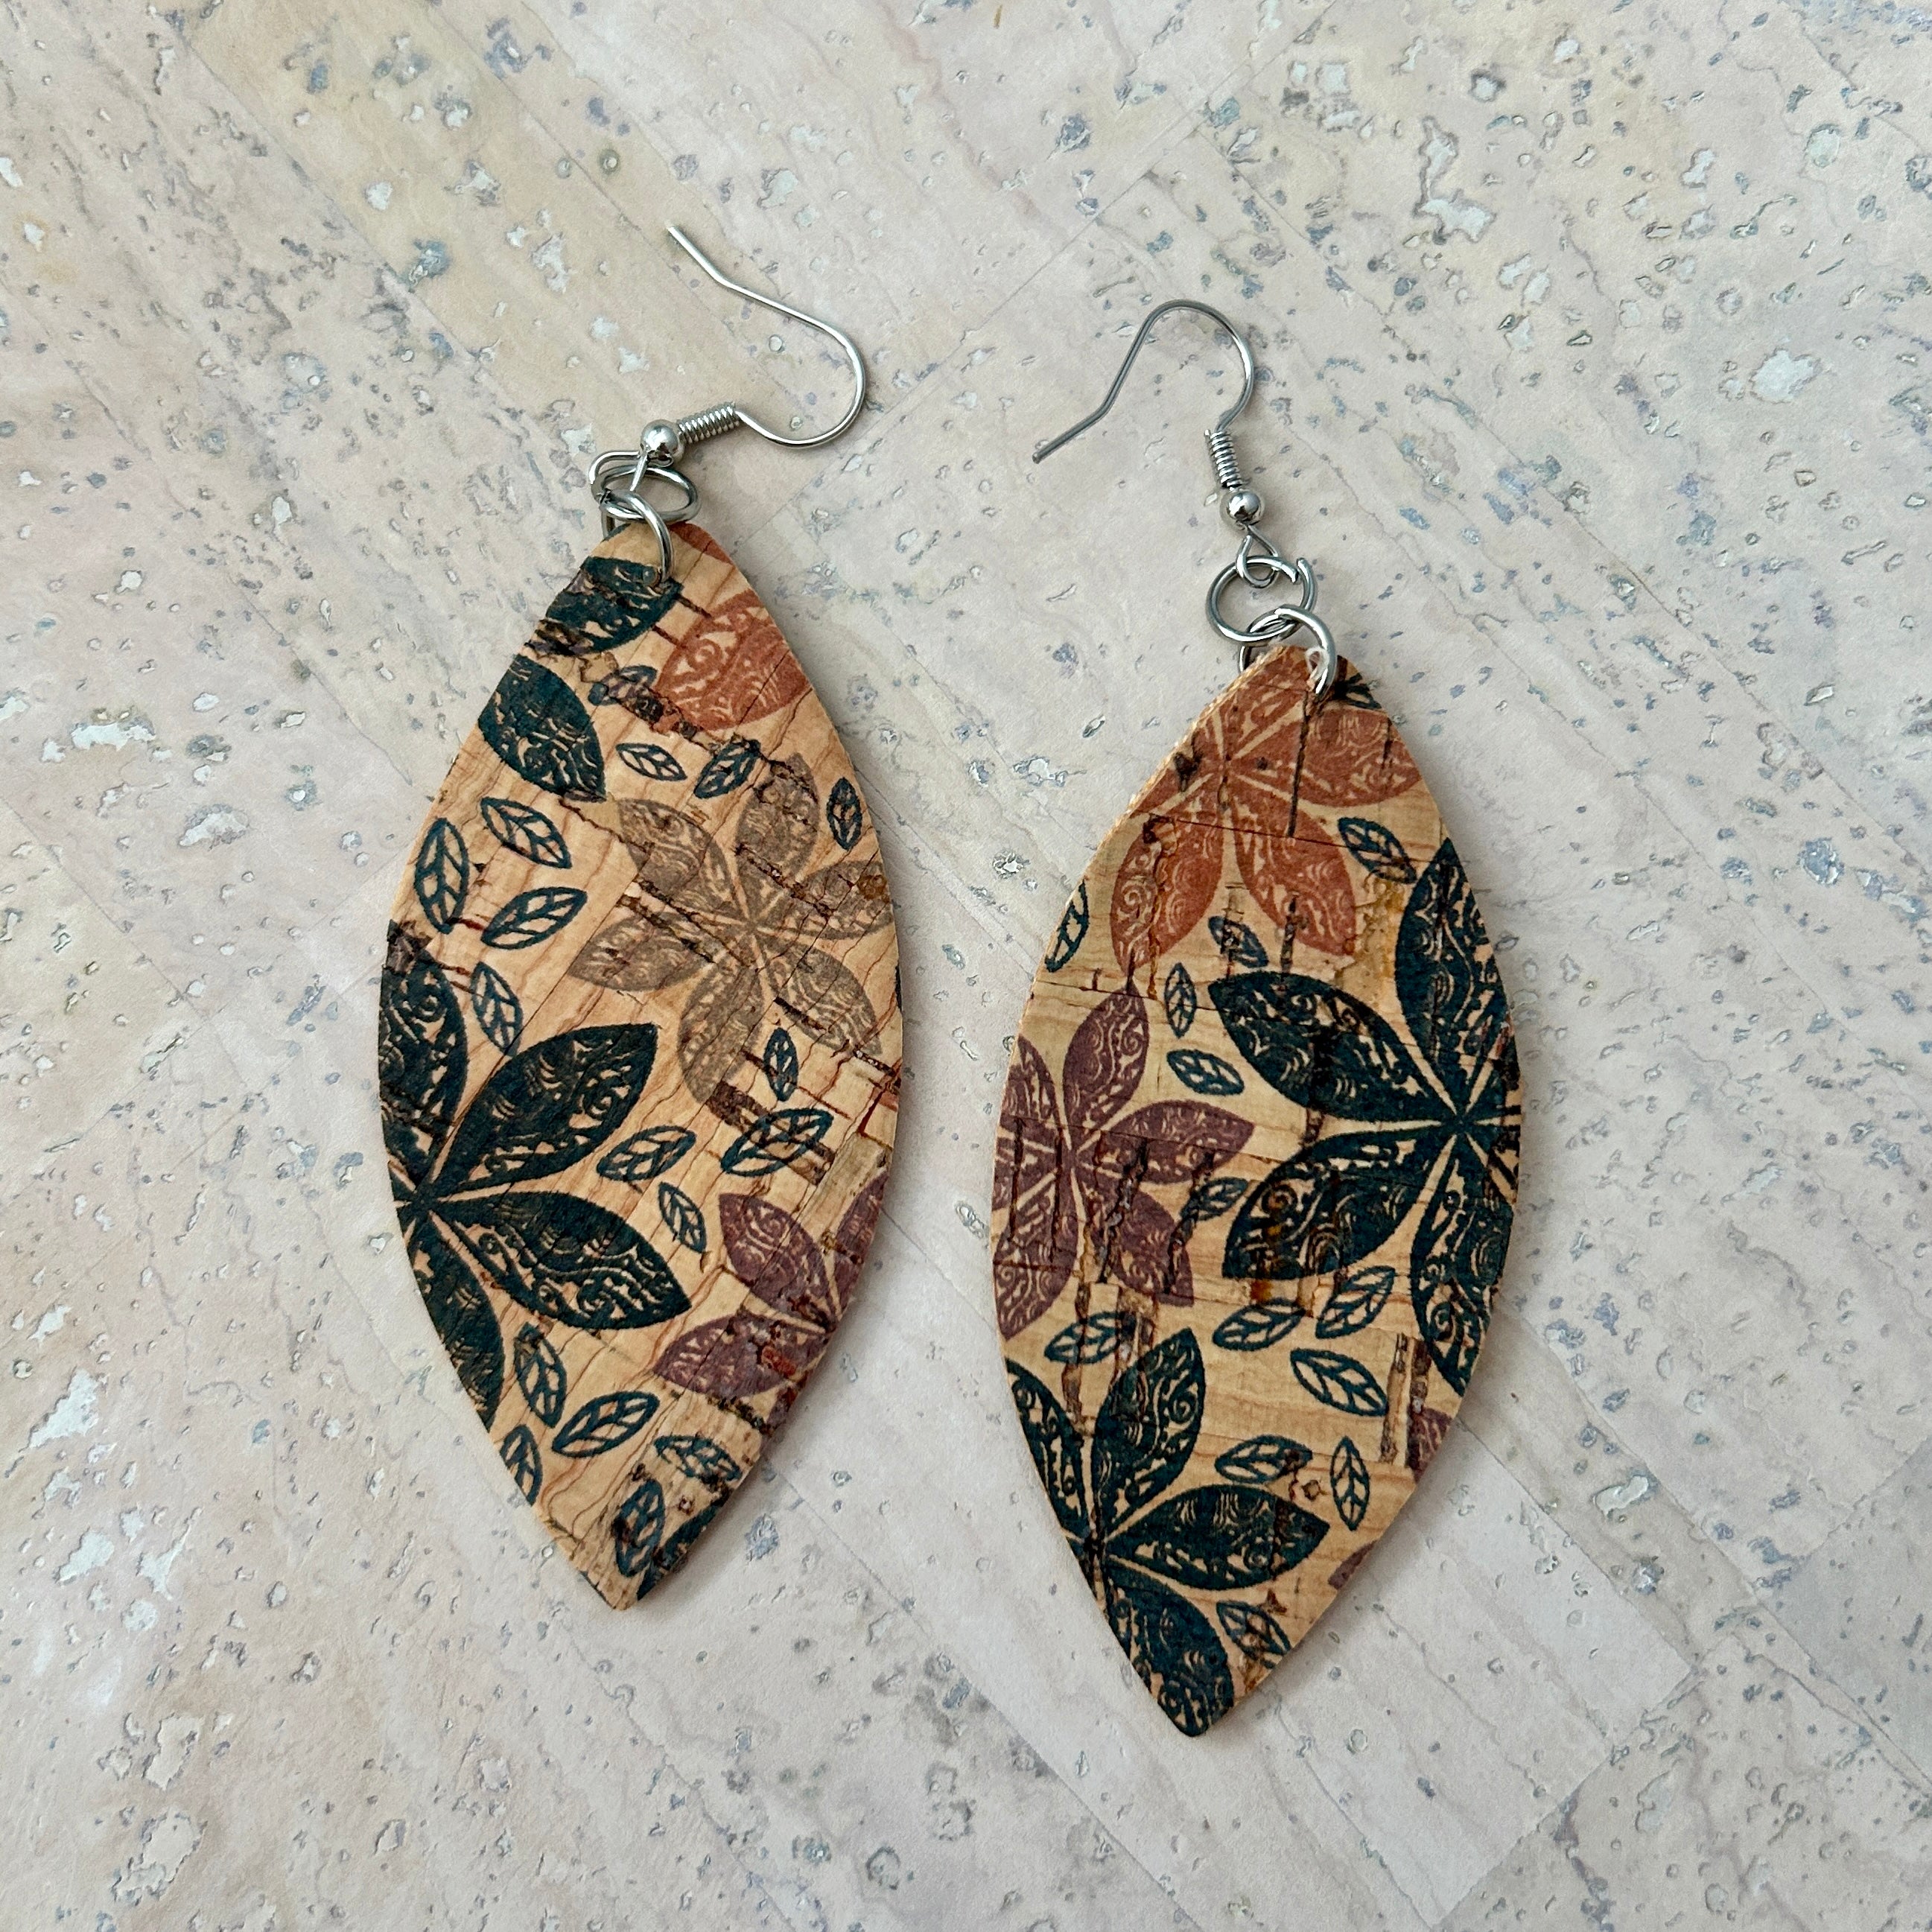 Angelco Accessories Marquise pattern cork drop earrings - brown print